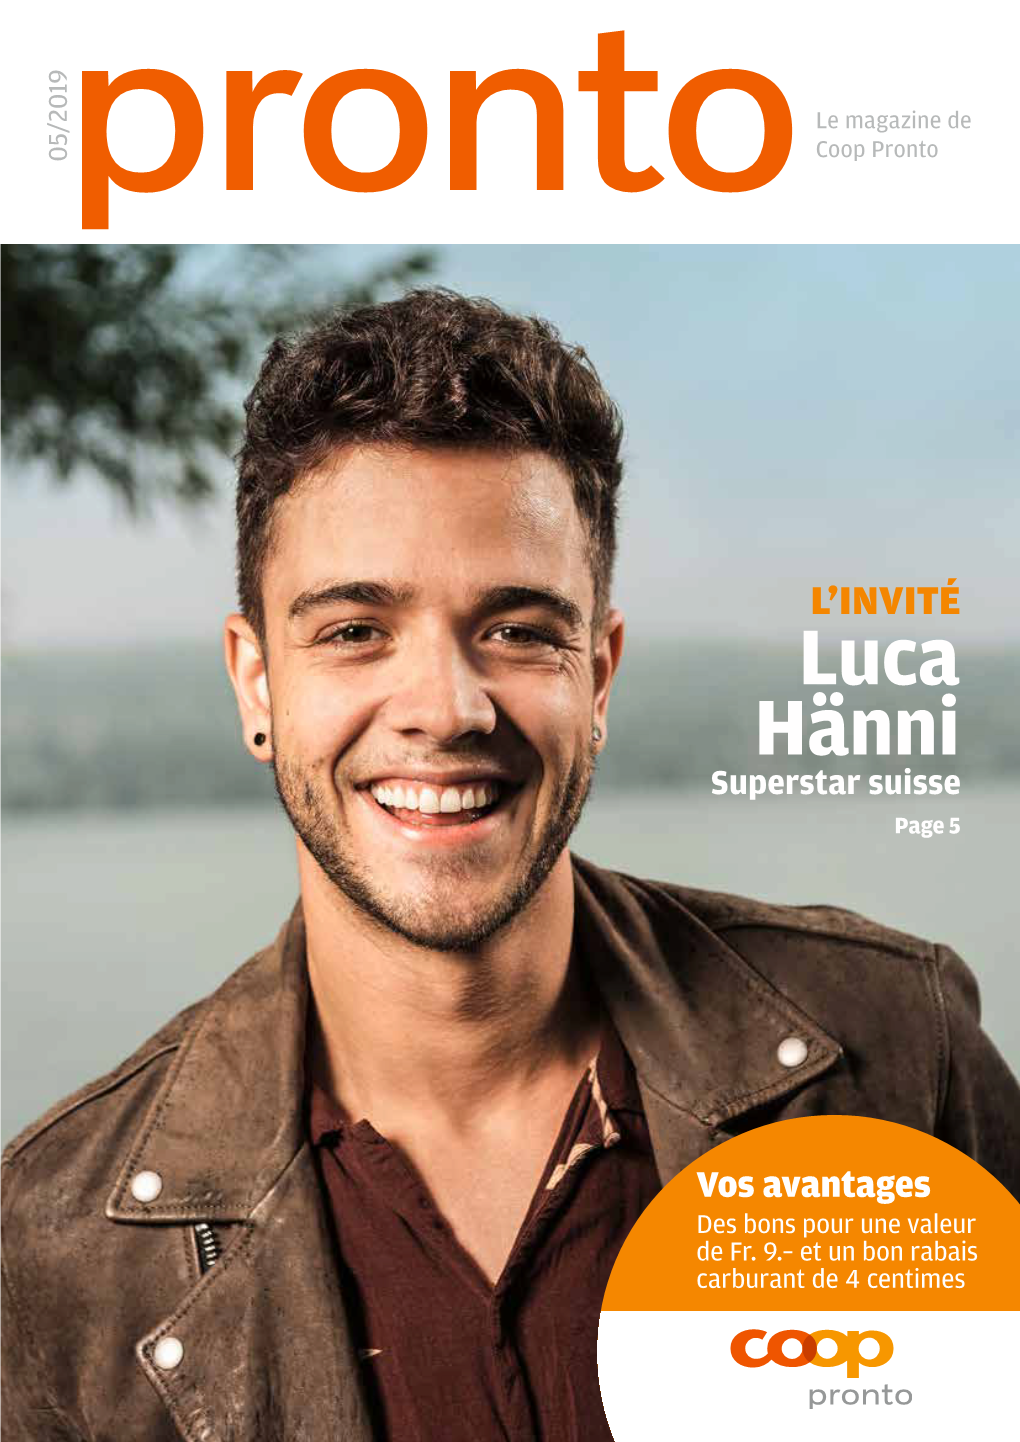 Luca Hänni Superstar Suisse Page 5